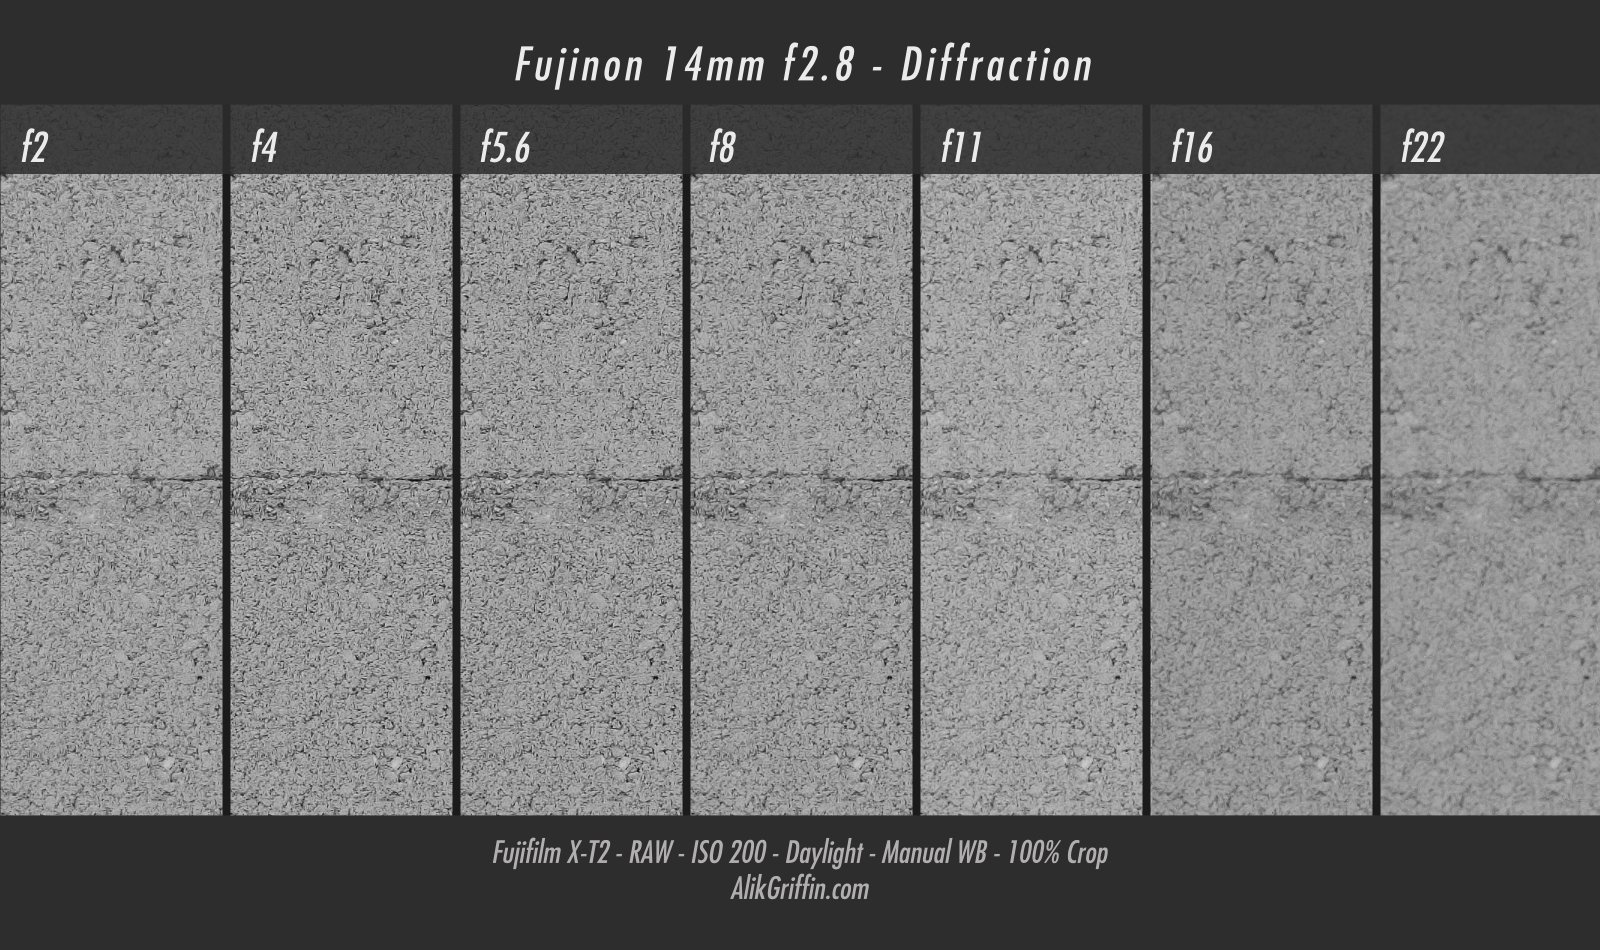 Fujinon 14mm f2.8 Diffraction & Sweet Spot Chart